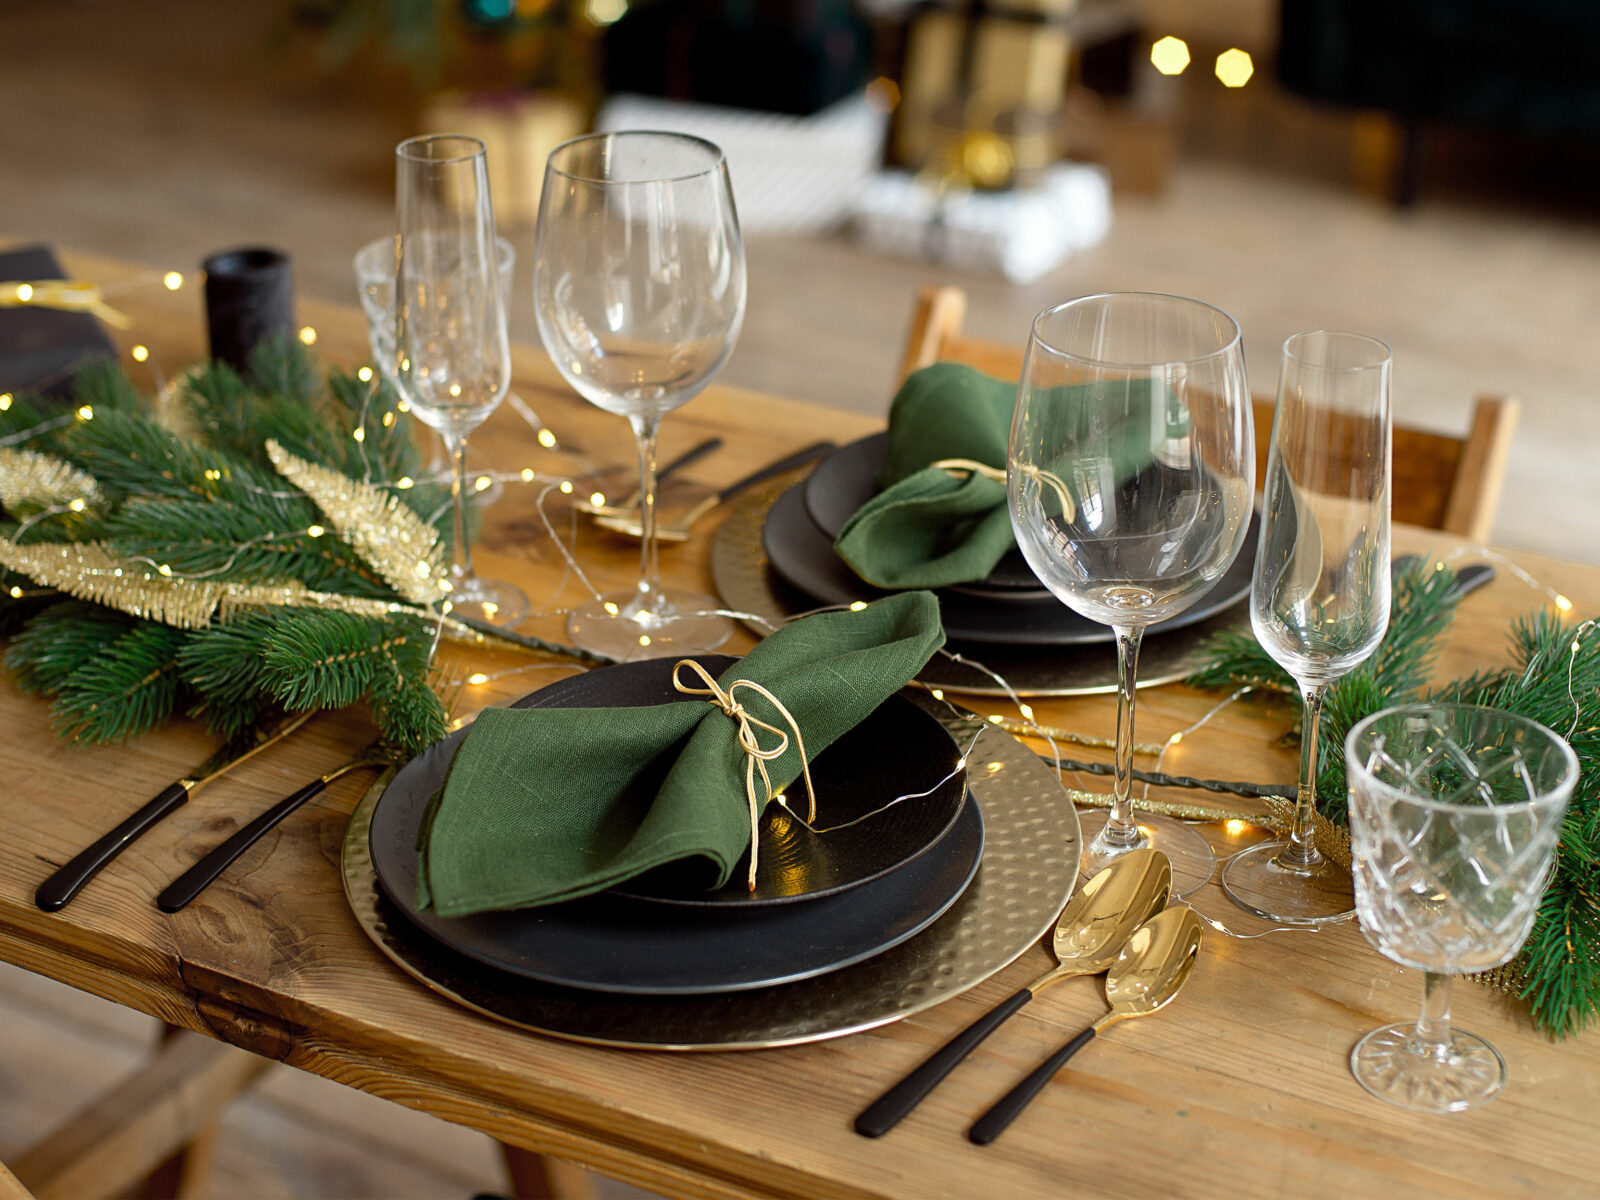 decorative table setting